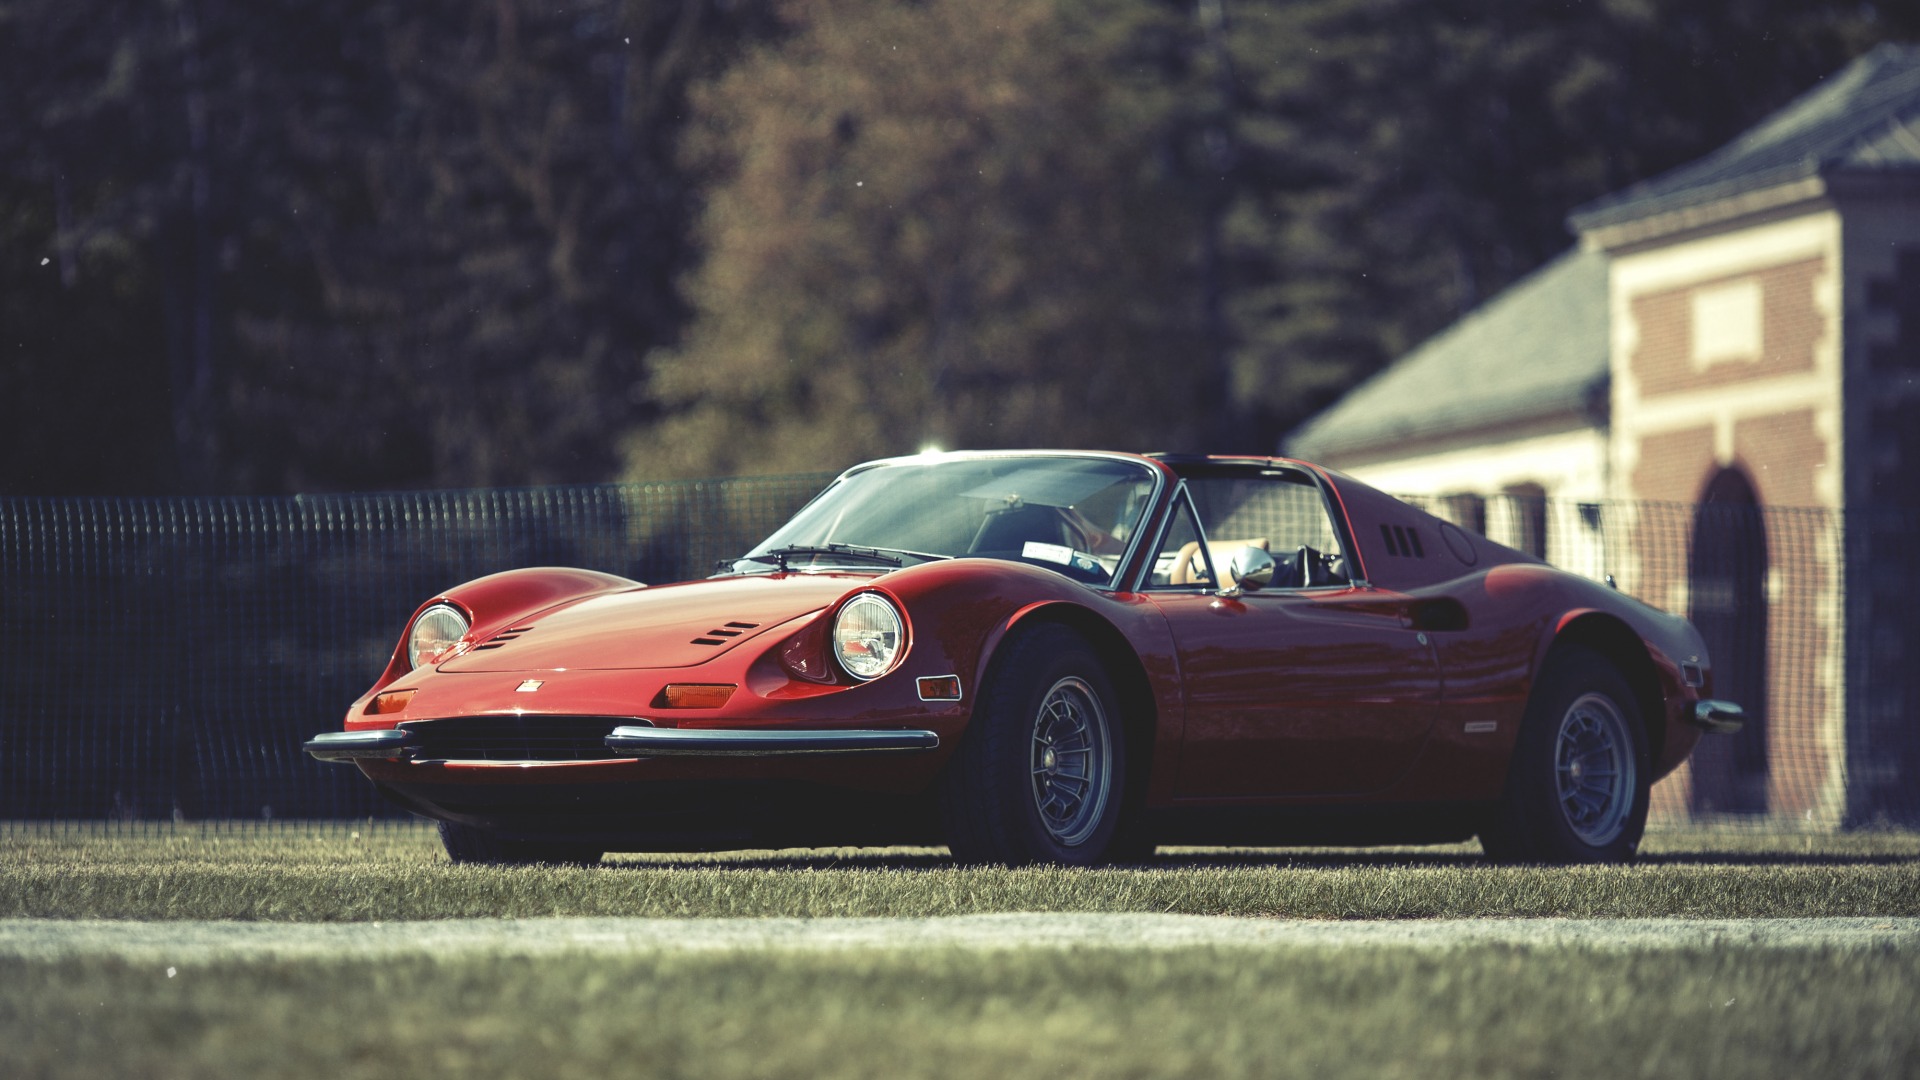 Ferrari Dino 246 Gt Wallpapers